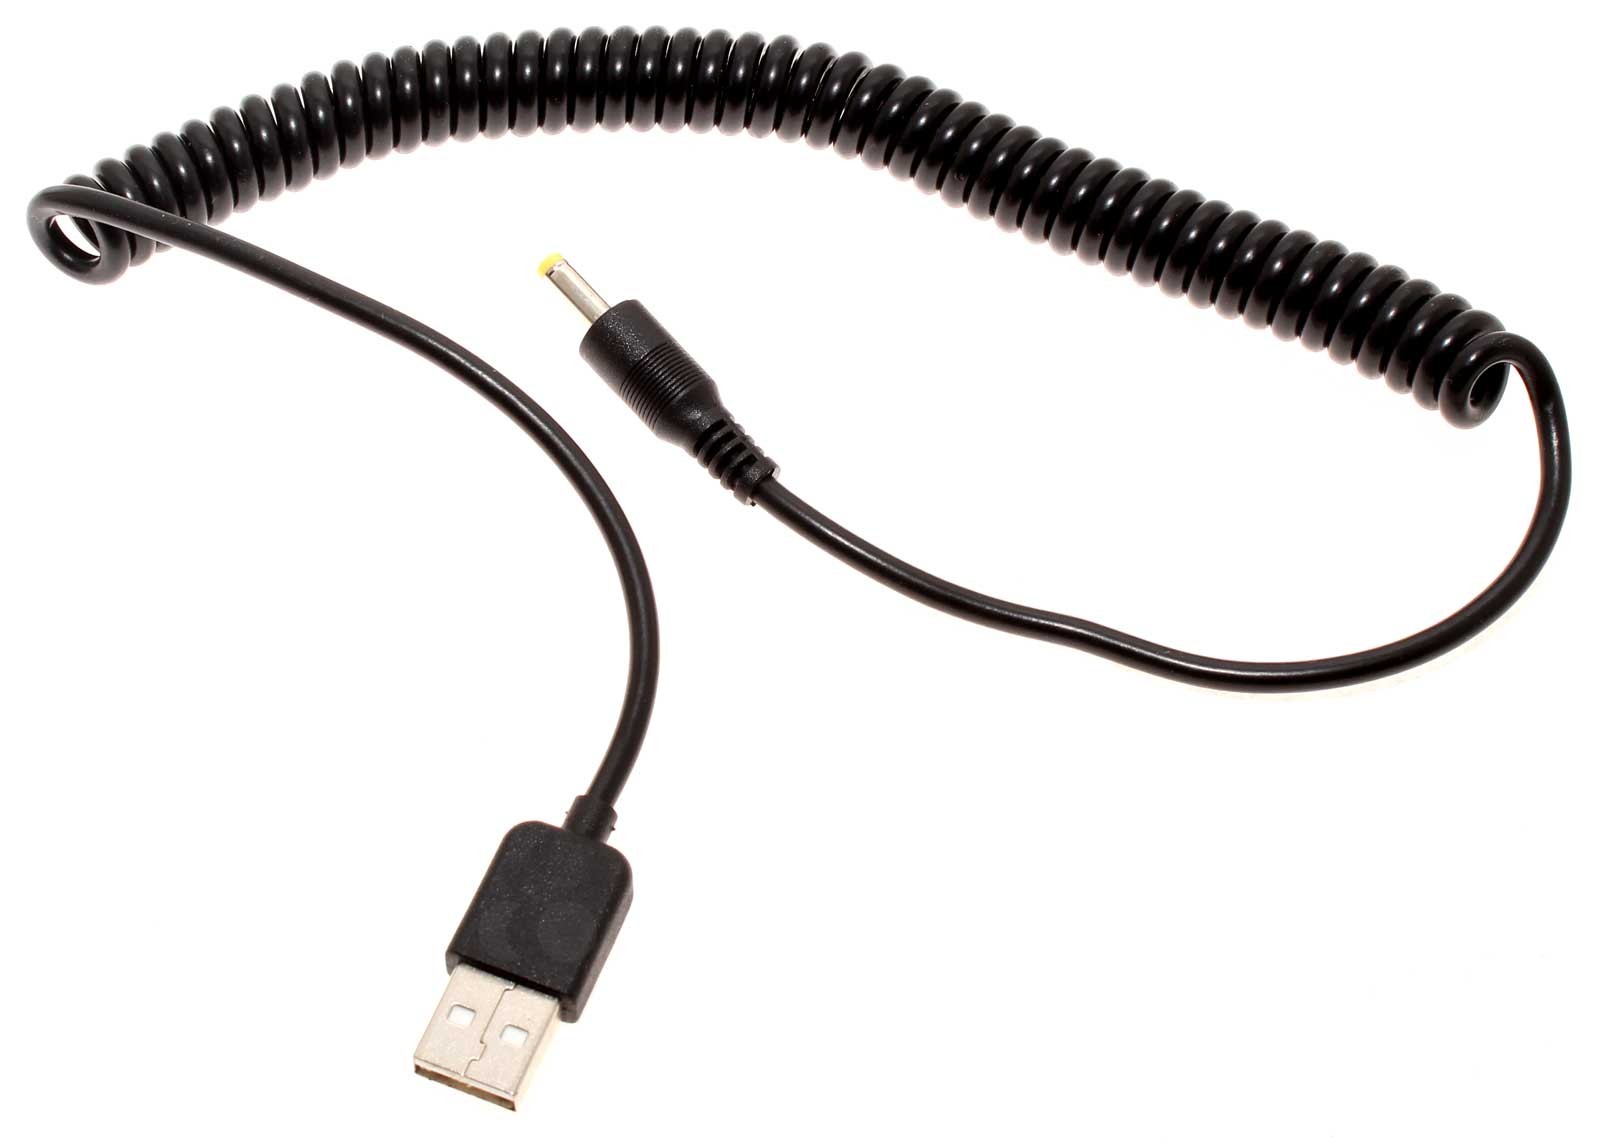 DC Spiral-Kabel USB wie Panasonic K2GHYYS00002 für HC-V770 HC-V777 u.a. Camcorder